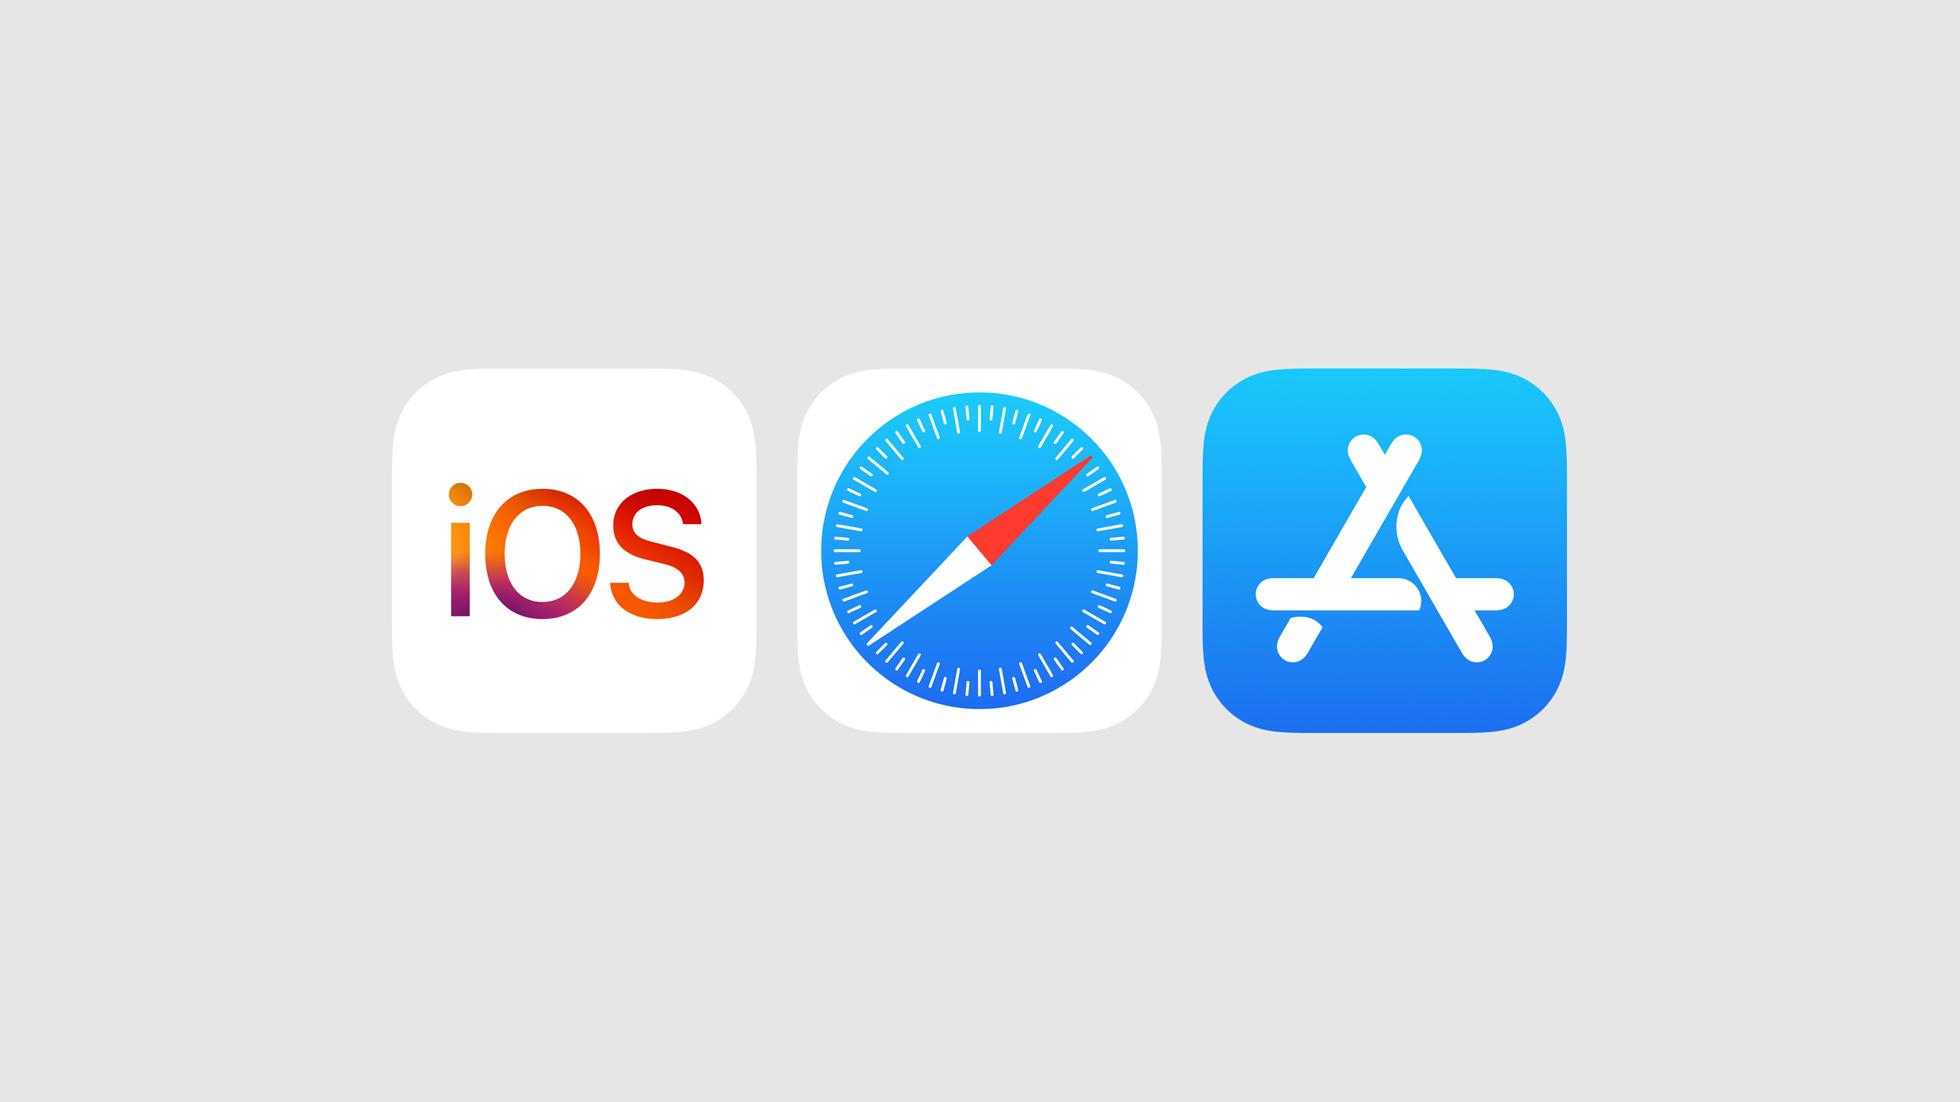 iOS, Safari and App Store logos on gray background